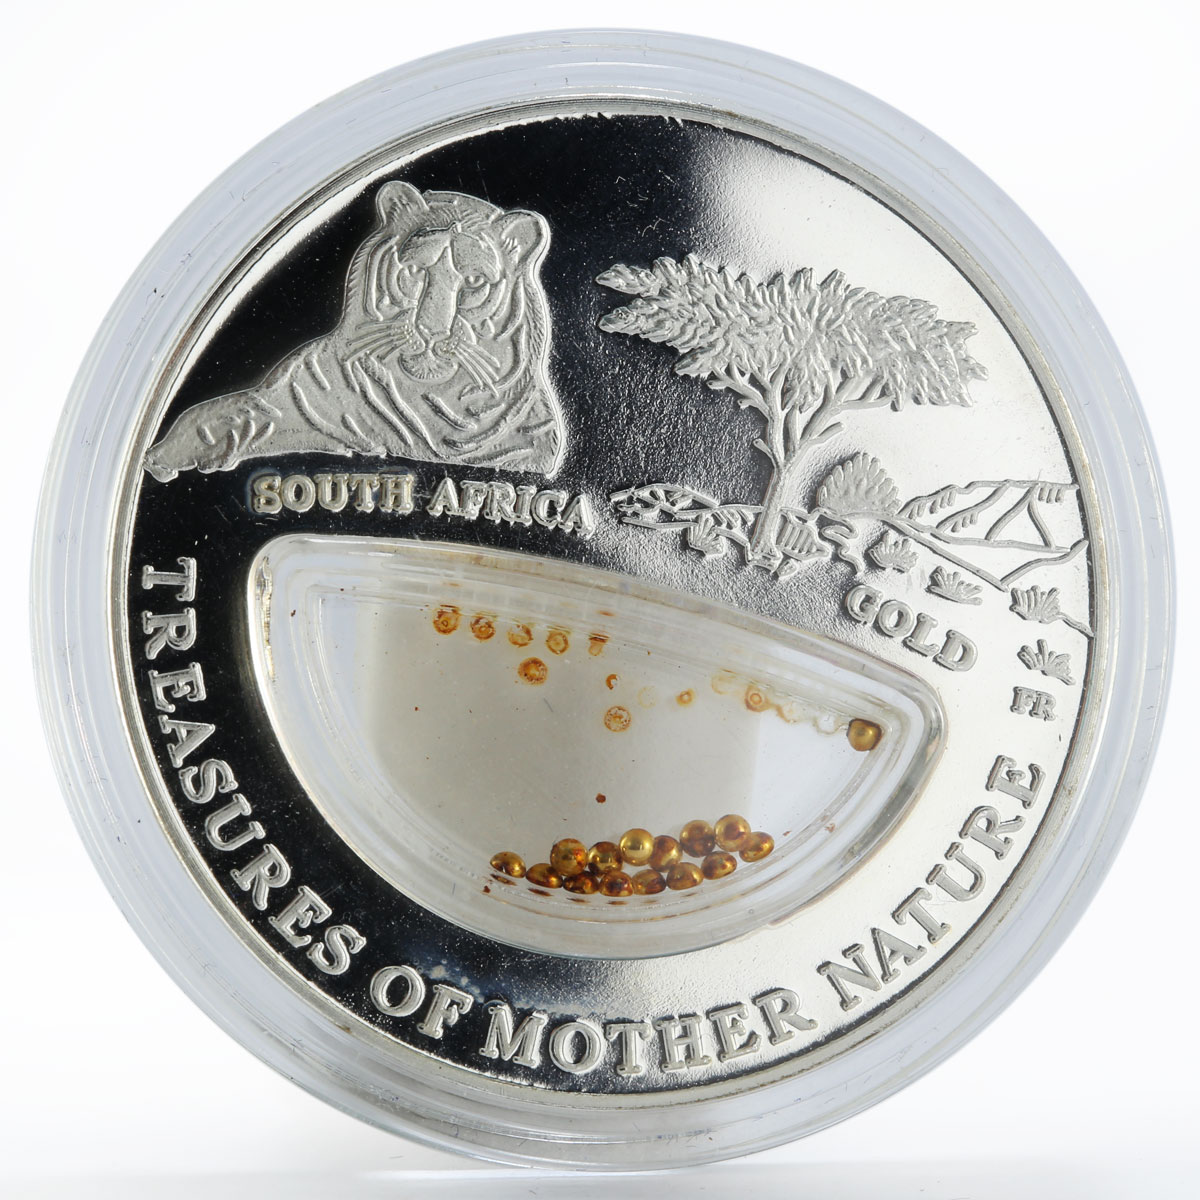 Fiji 10 dollars South Africa - Gold cu-ni silverplated coin 2012